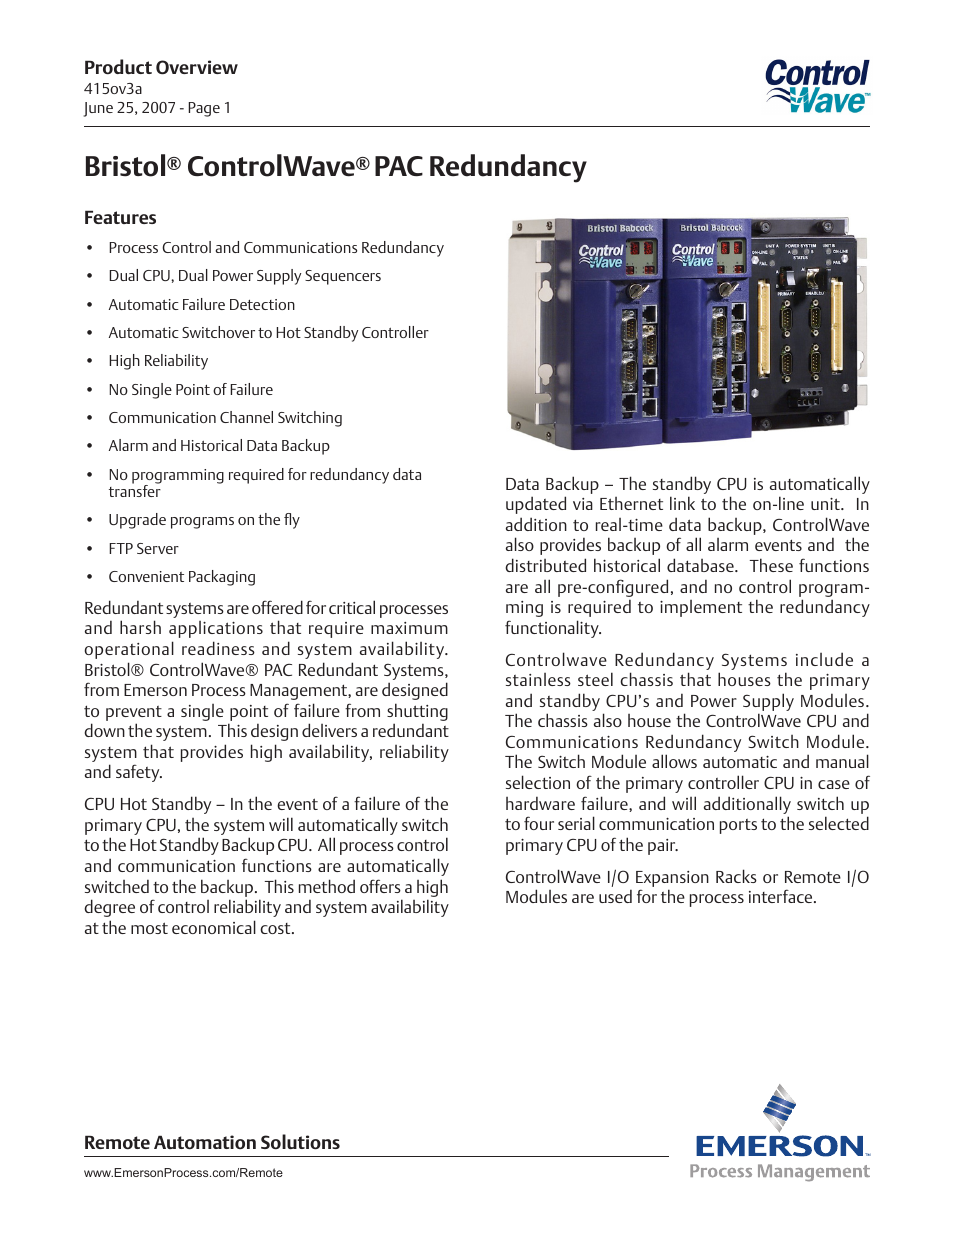 Bristol ControlWave PAC Redundancy